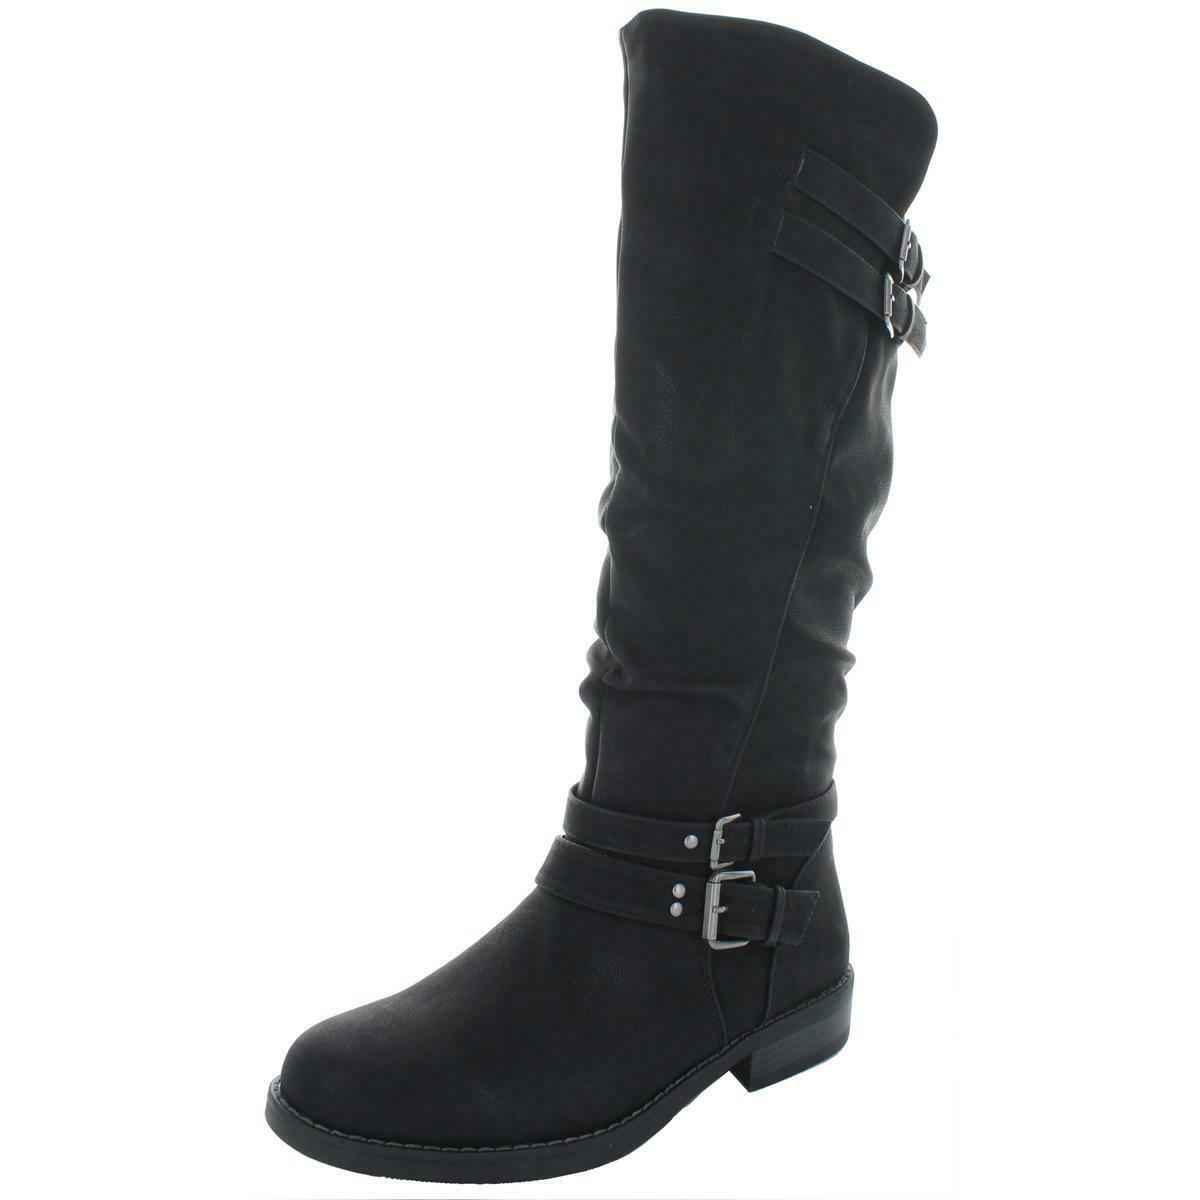 XOXO Womens Morton Black Knee-High Riding Boots Shoes 7.5 Medium (B,M) BHFO 2297